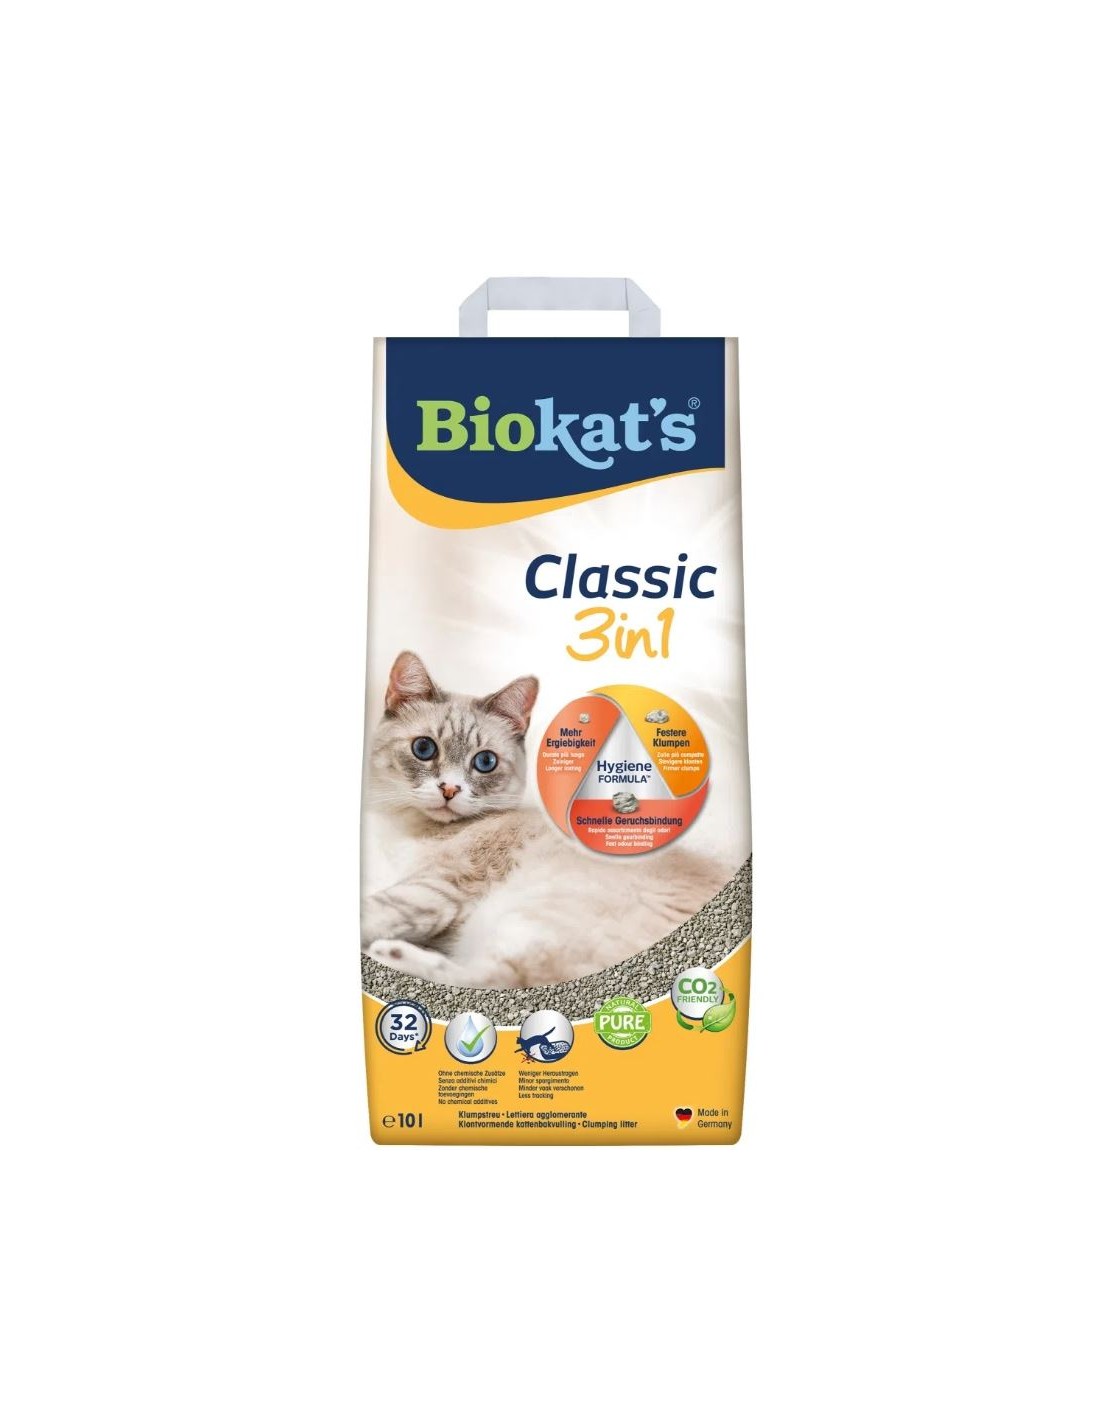 Biokat's Classic 3in1 - Lettiera per Gatti in Bentonite - 10 Lt